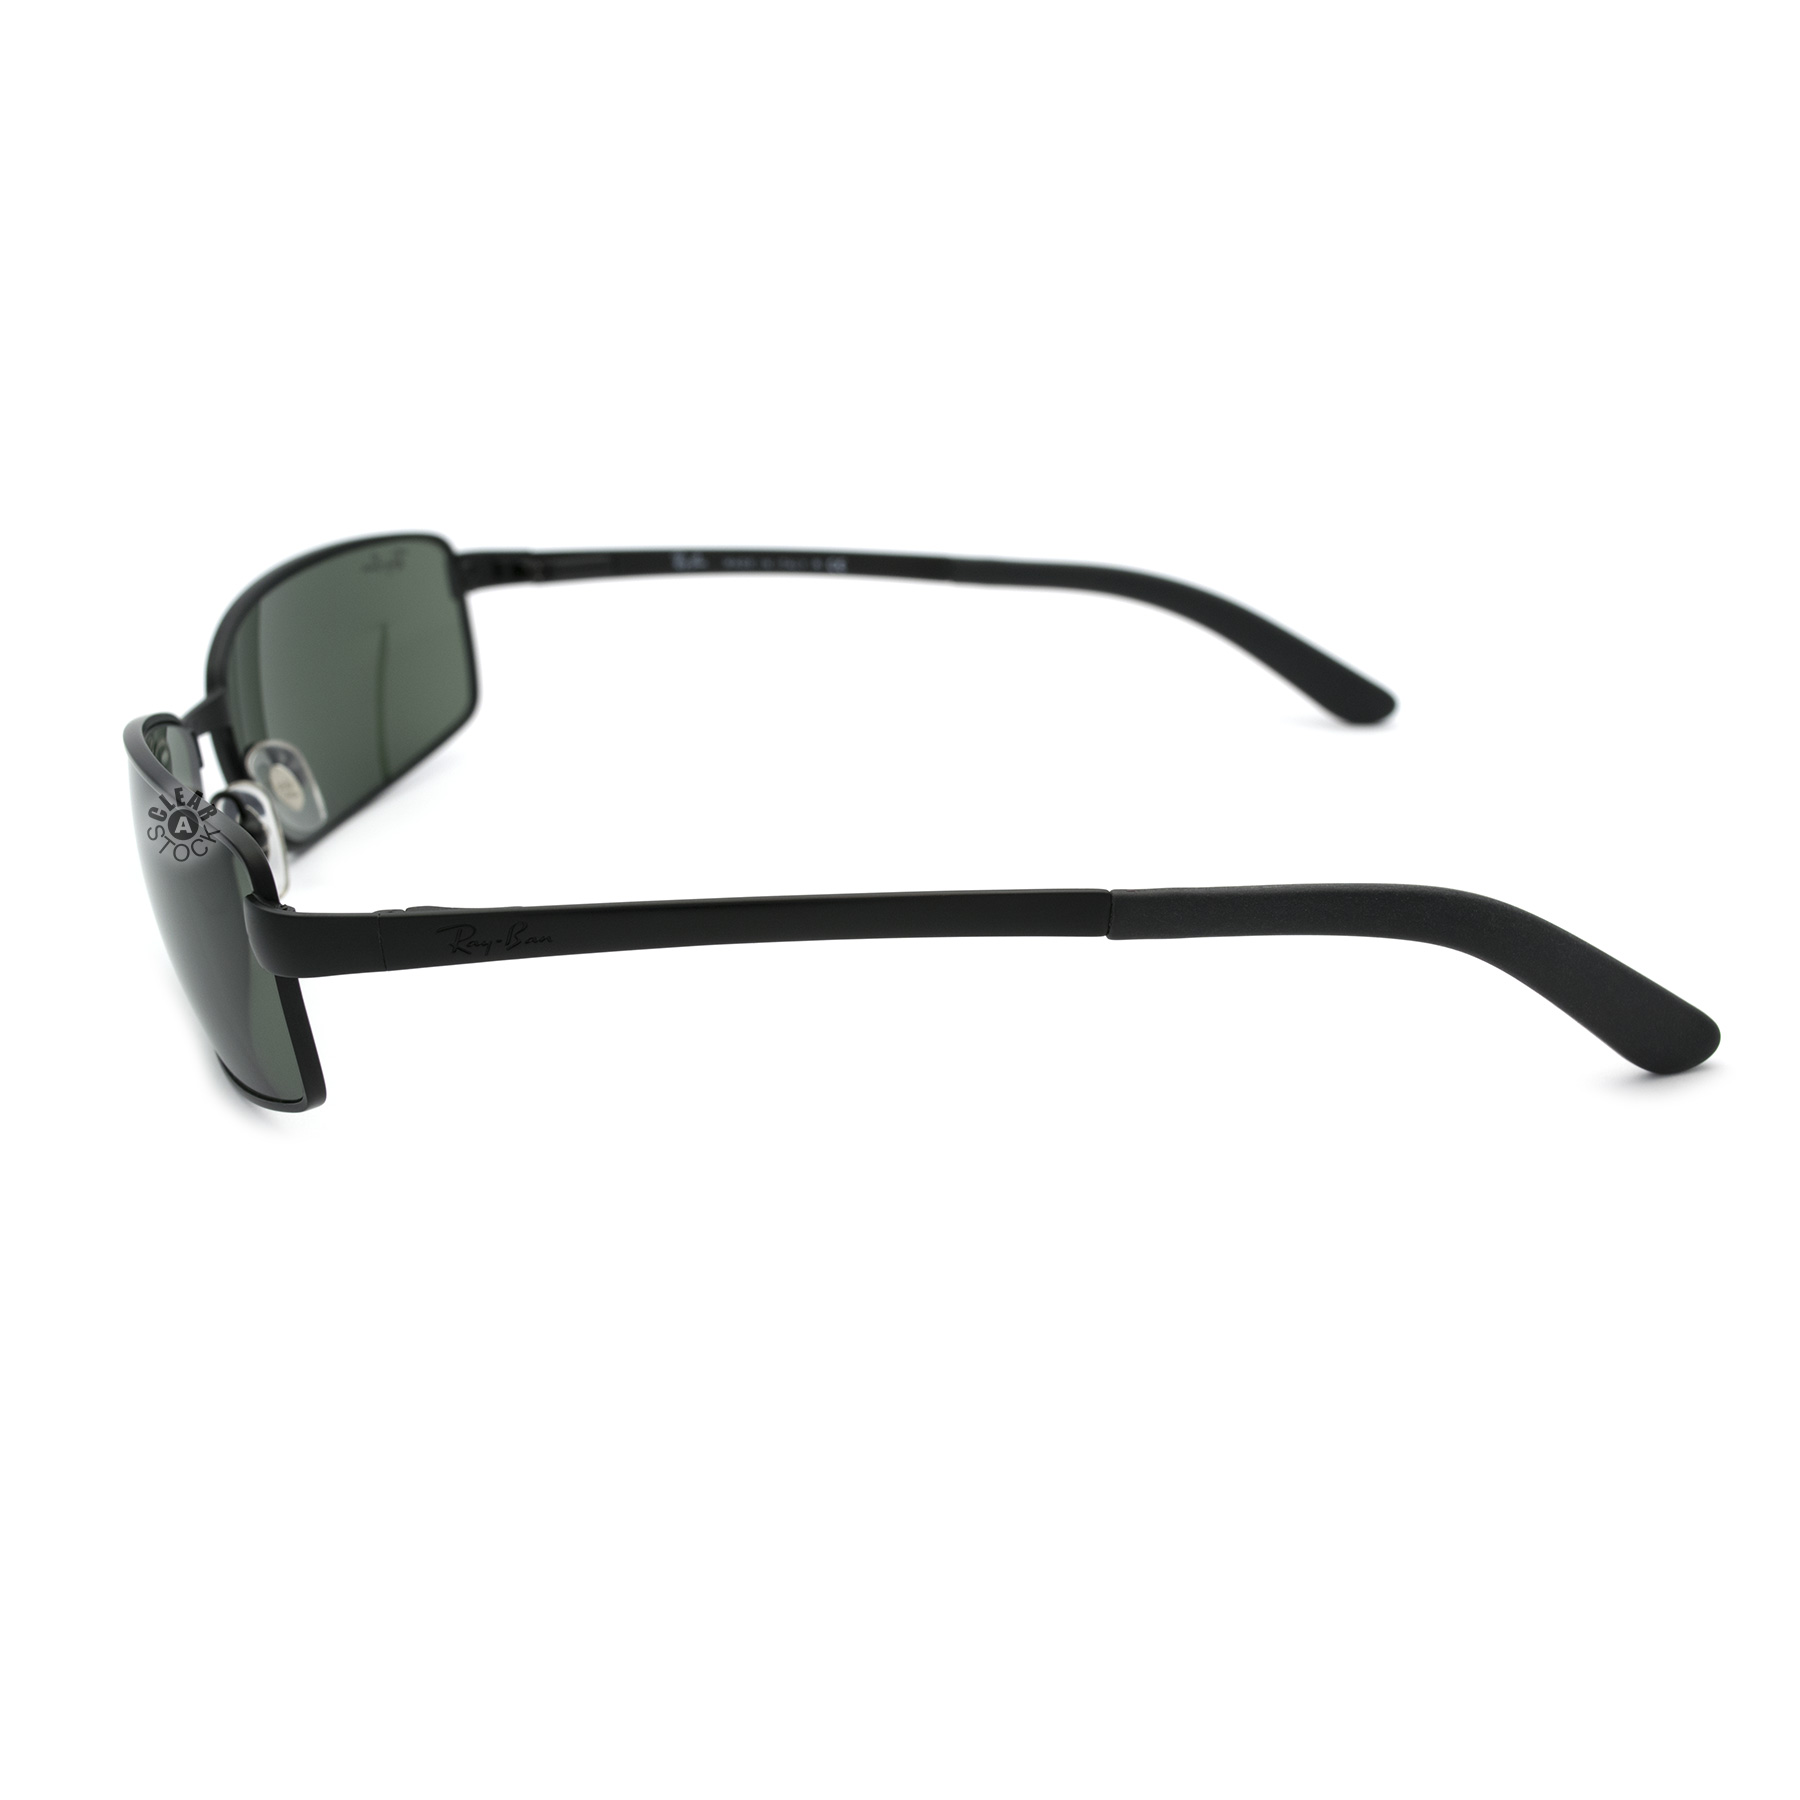 Ray-Ban Sunglasses 006 Matte Black/Green 59mm